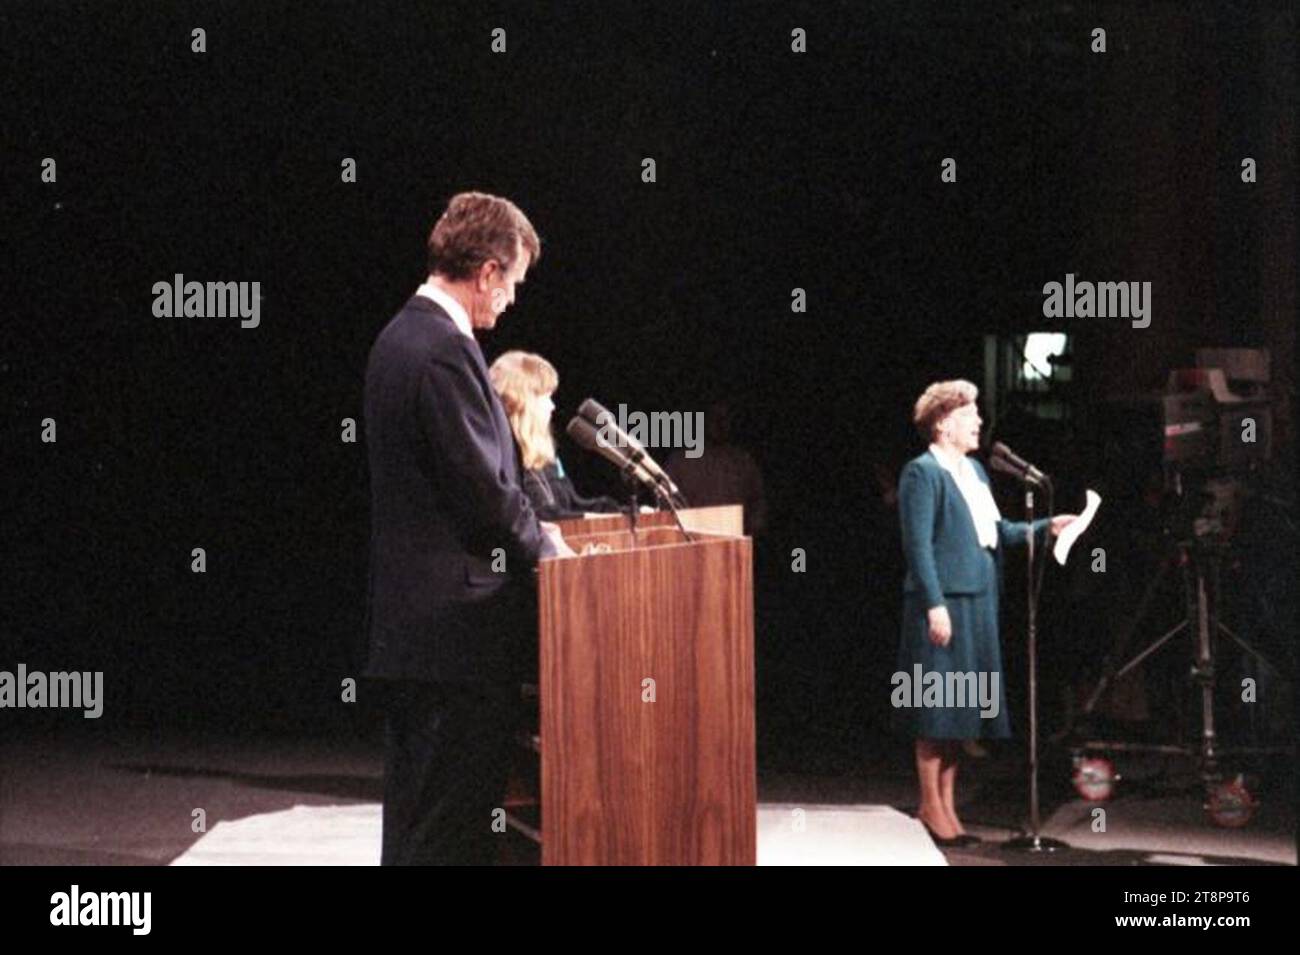 Vice President Bush practices onstage for the 1984 Vice Presidential Debate between himself and Geraldine Ferraro, held in Philadelphia, PA. 3276. Stock Photo